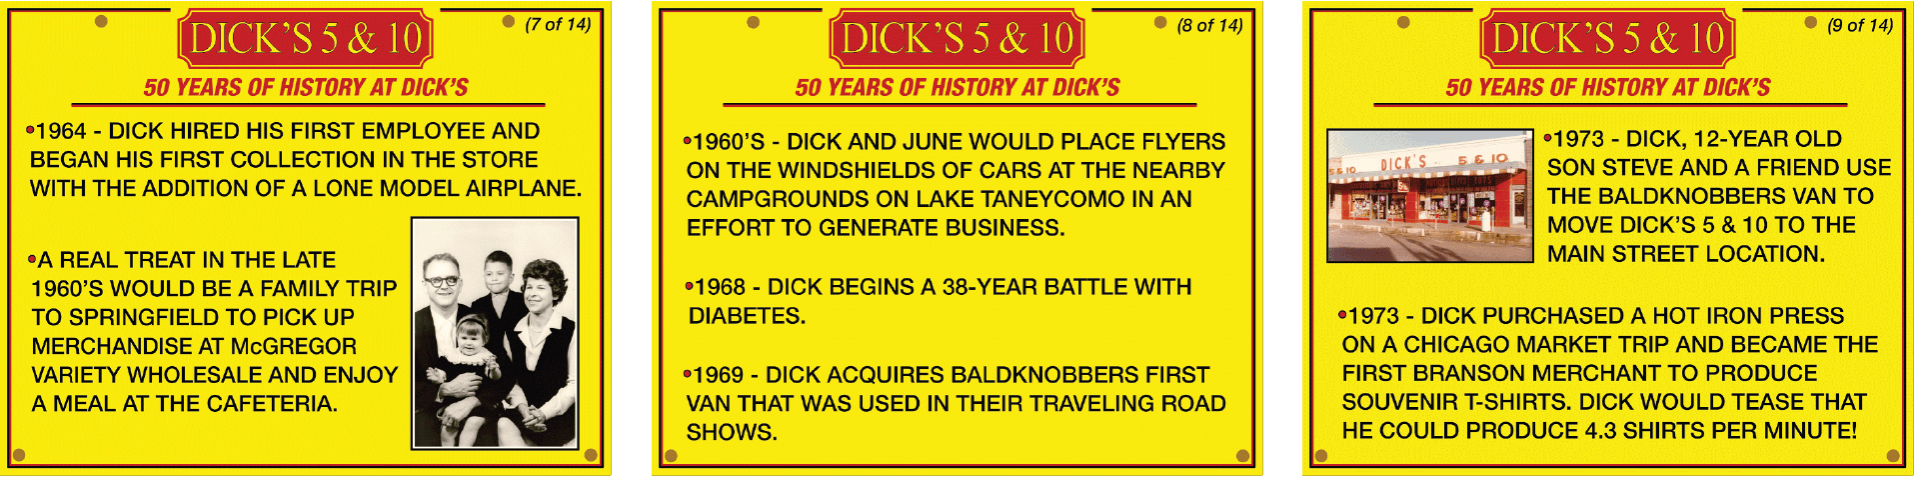 dicks 5 & 10 history 3